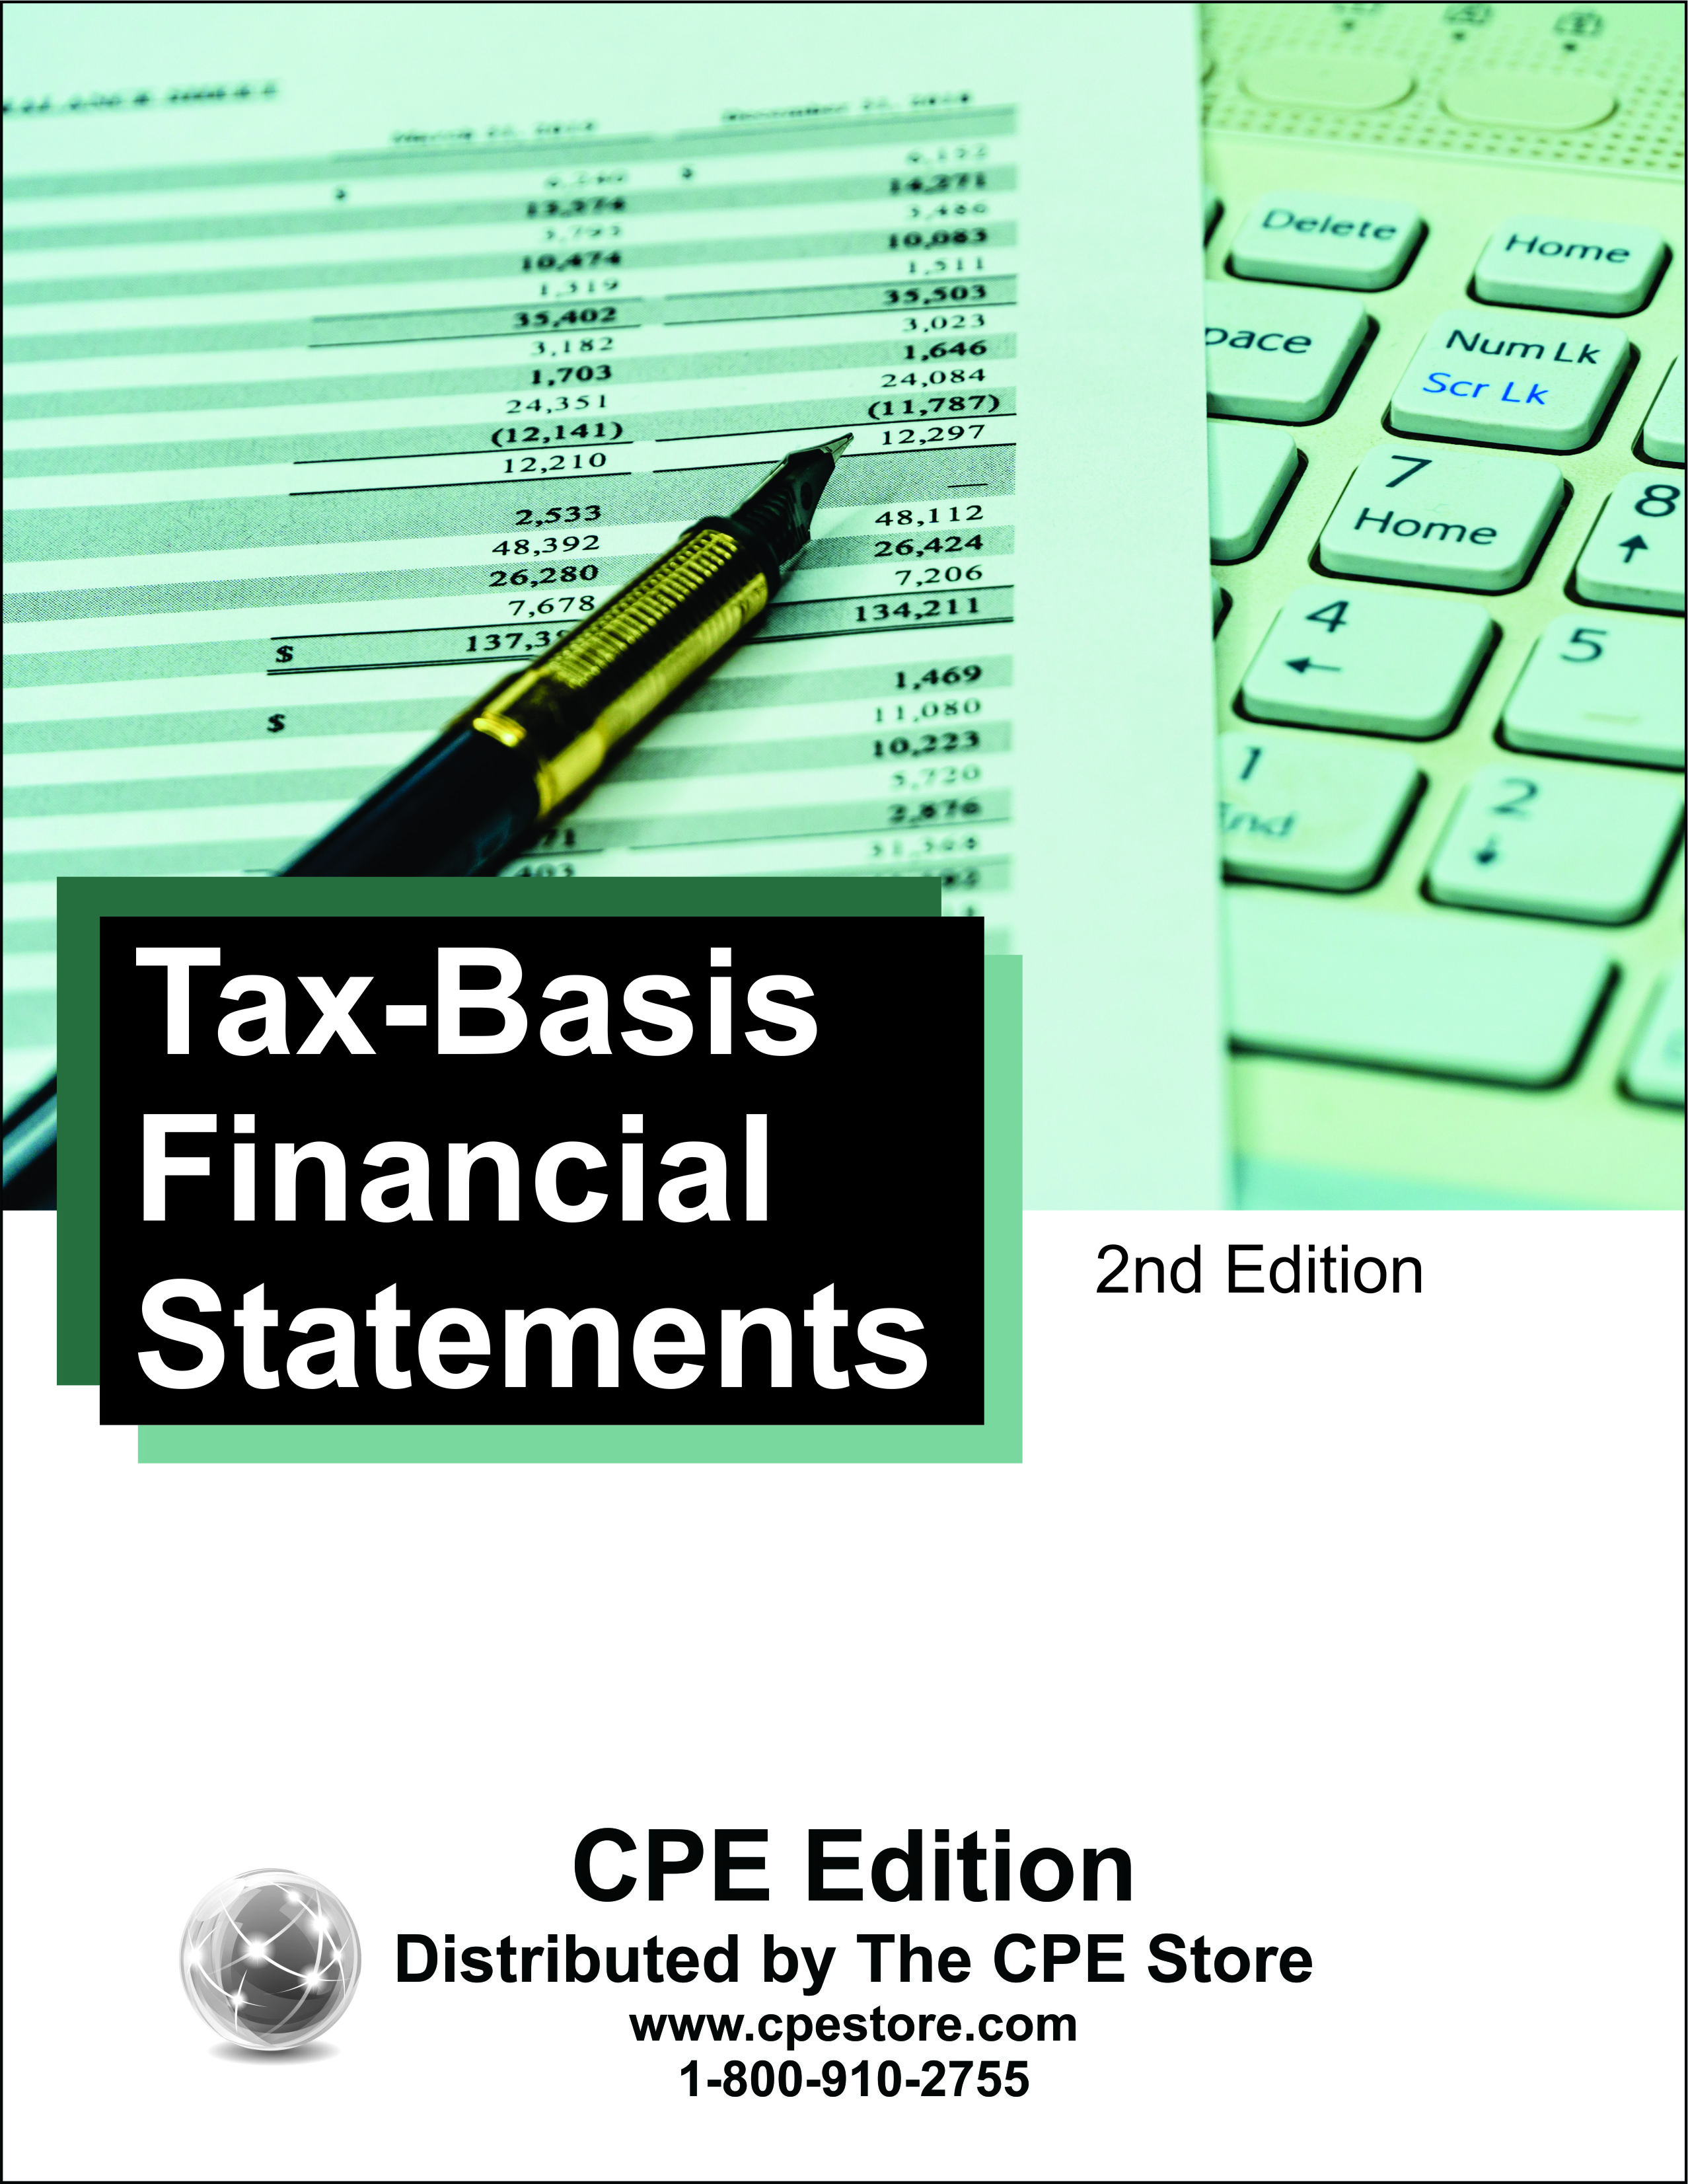 Tax-Basis Financial Statements